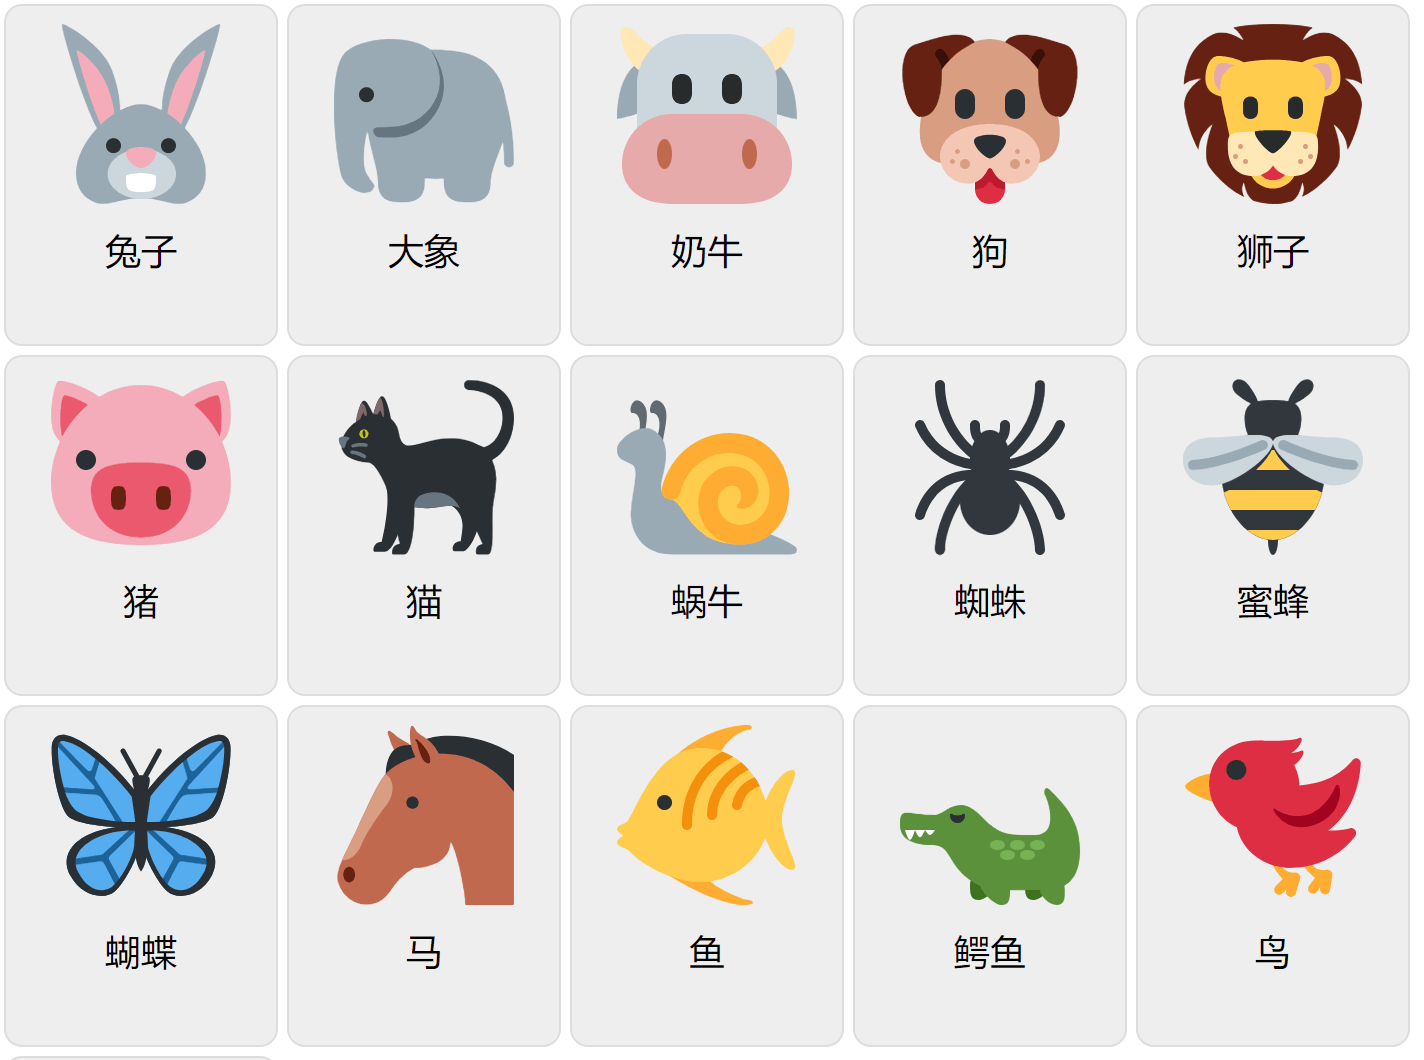 Animales en chino mandarín 1